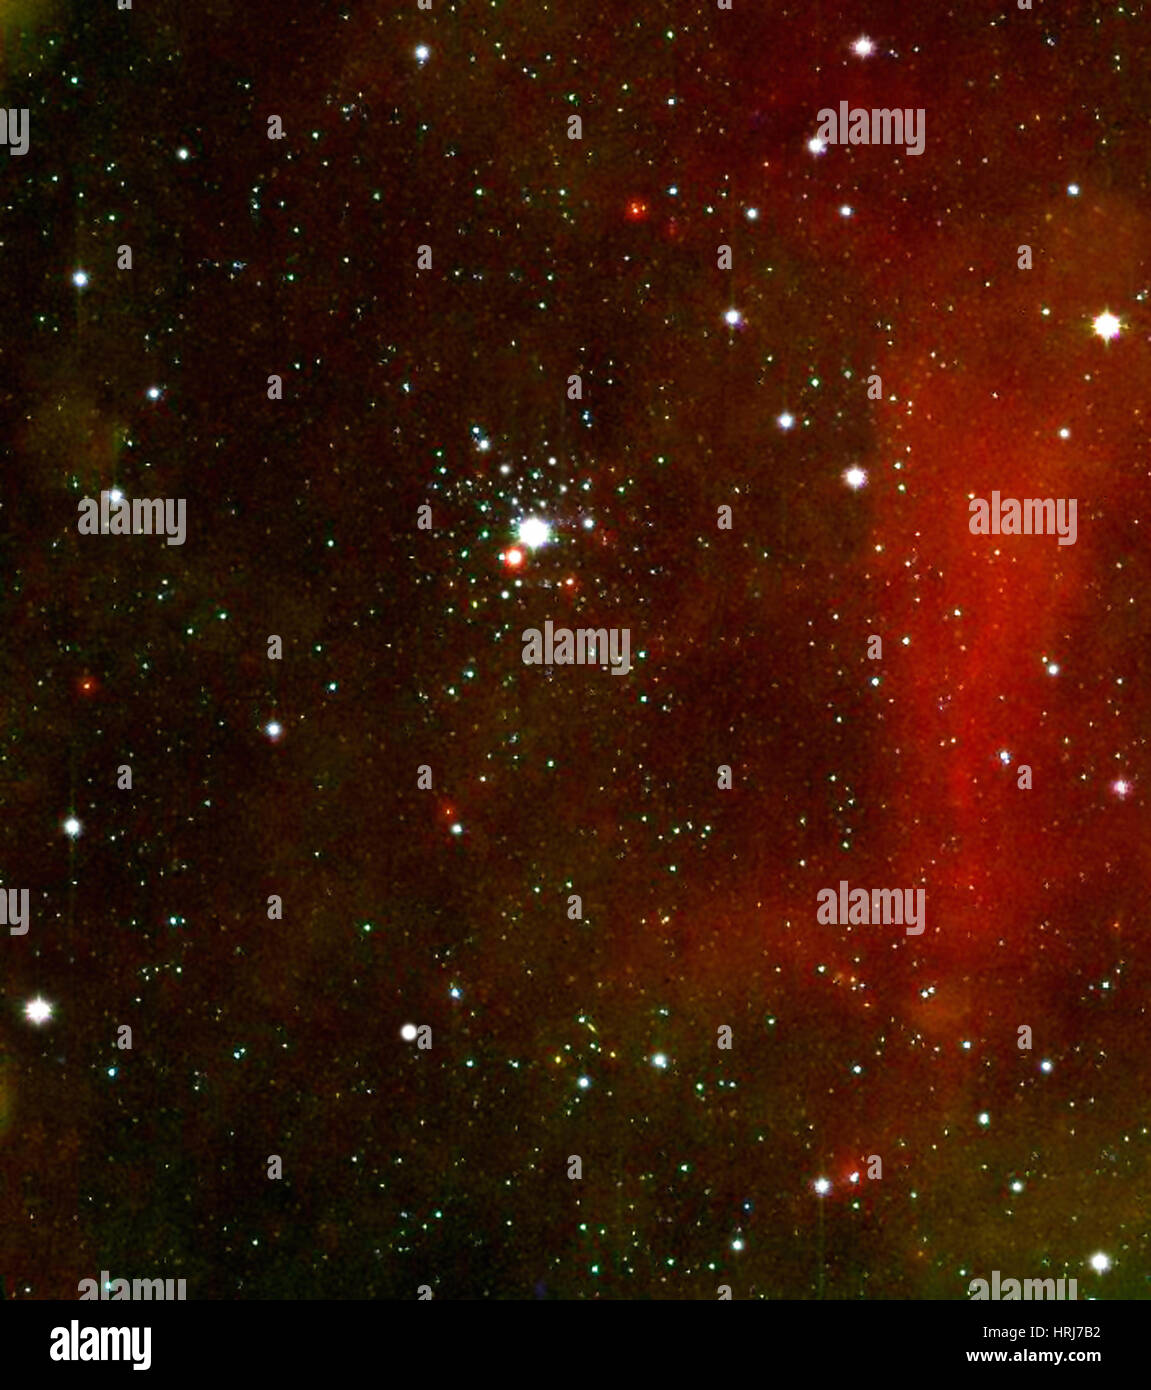 NGC 2362, Caldwell 64, Tau Canis Majoris Cluster, Open Cluster Foto de stock